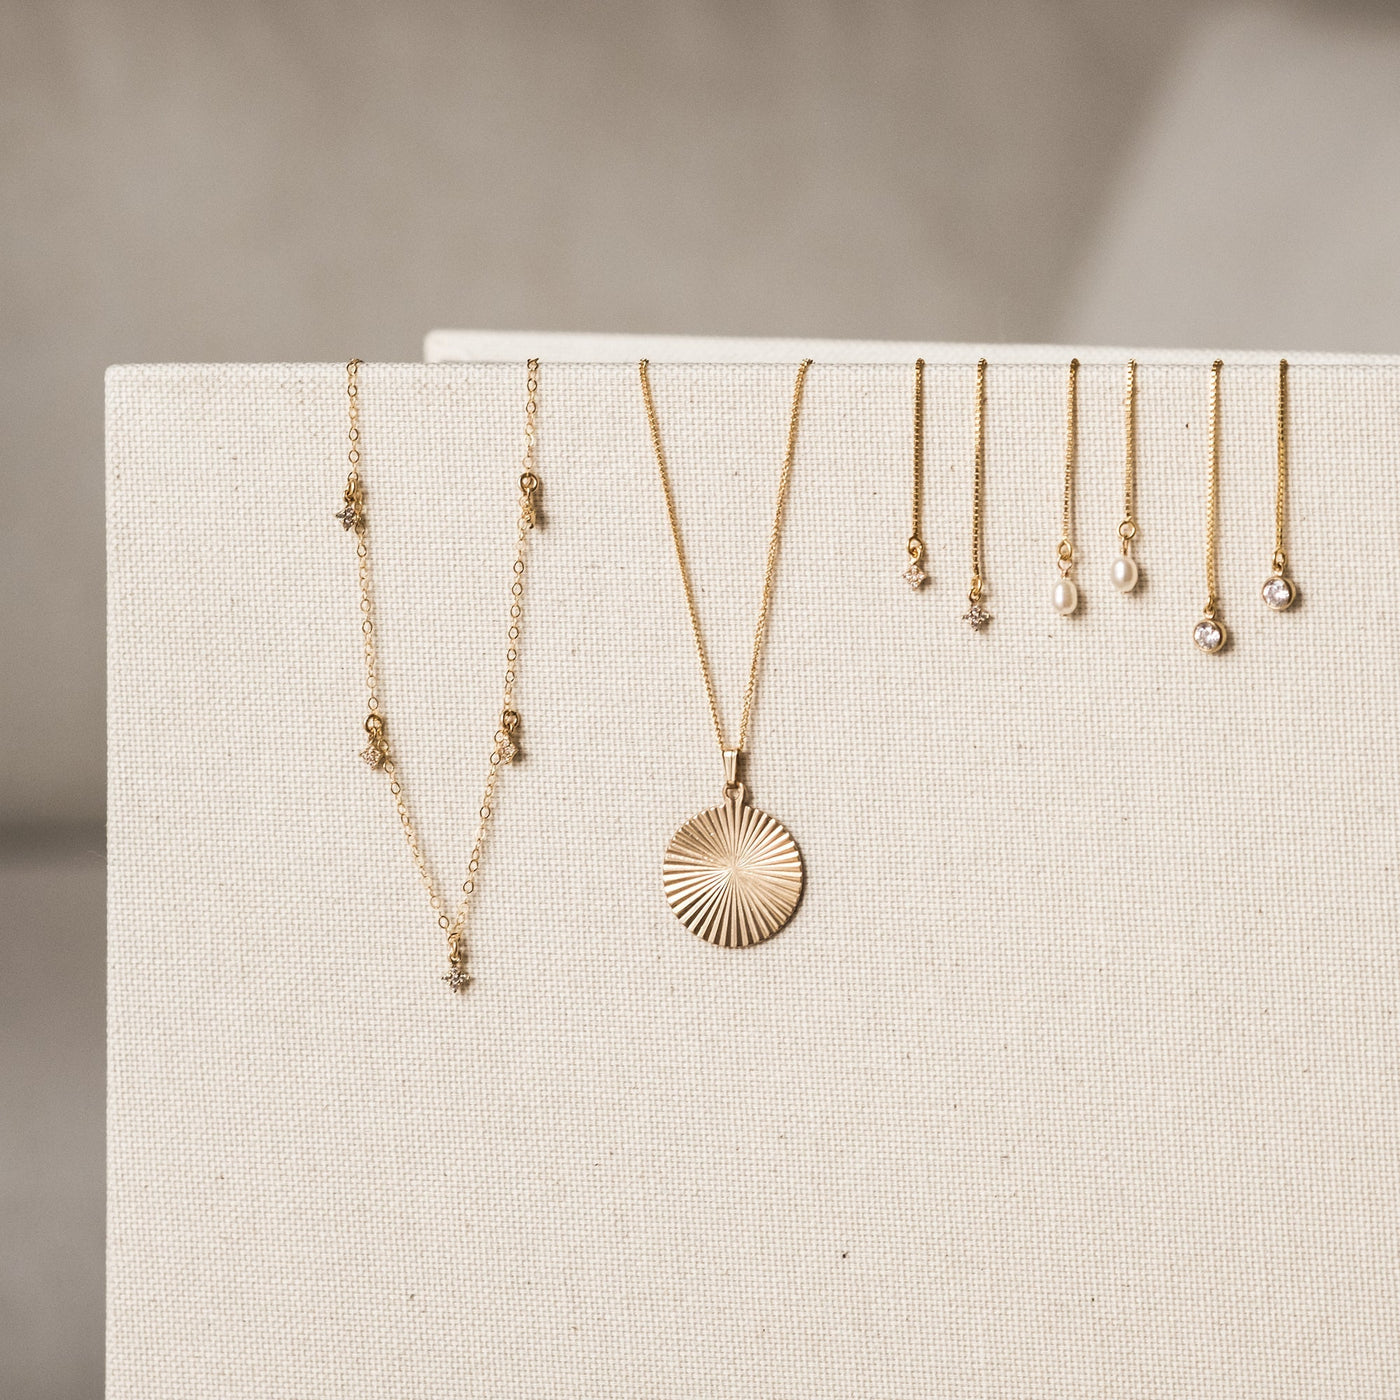 Sunburst Pendant Necklace | Simple & Dainty Jewelry